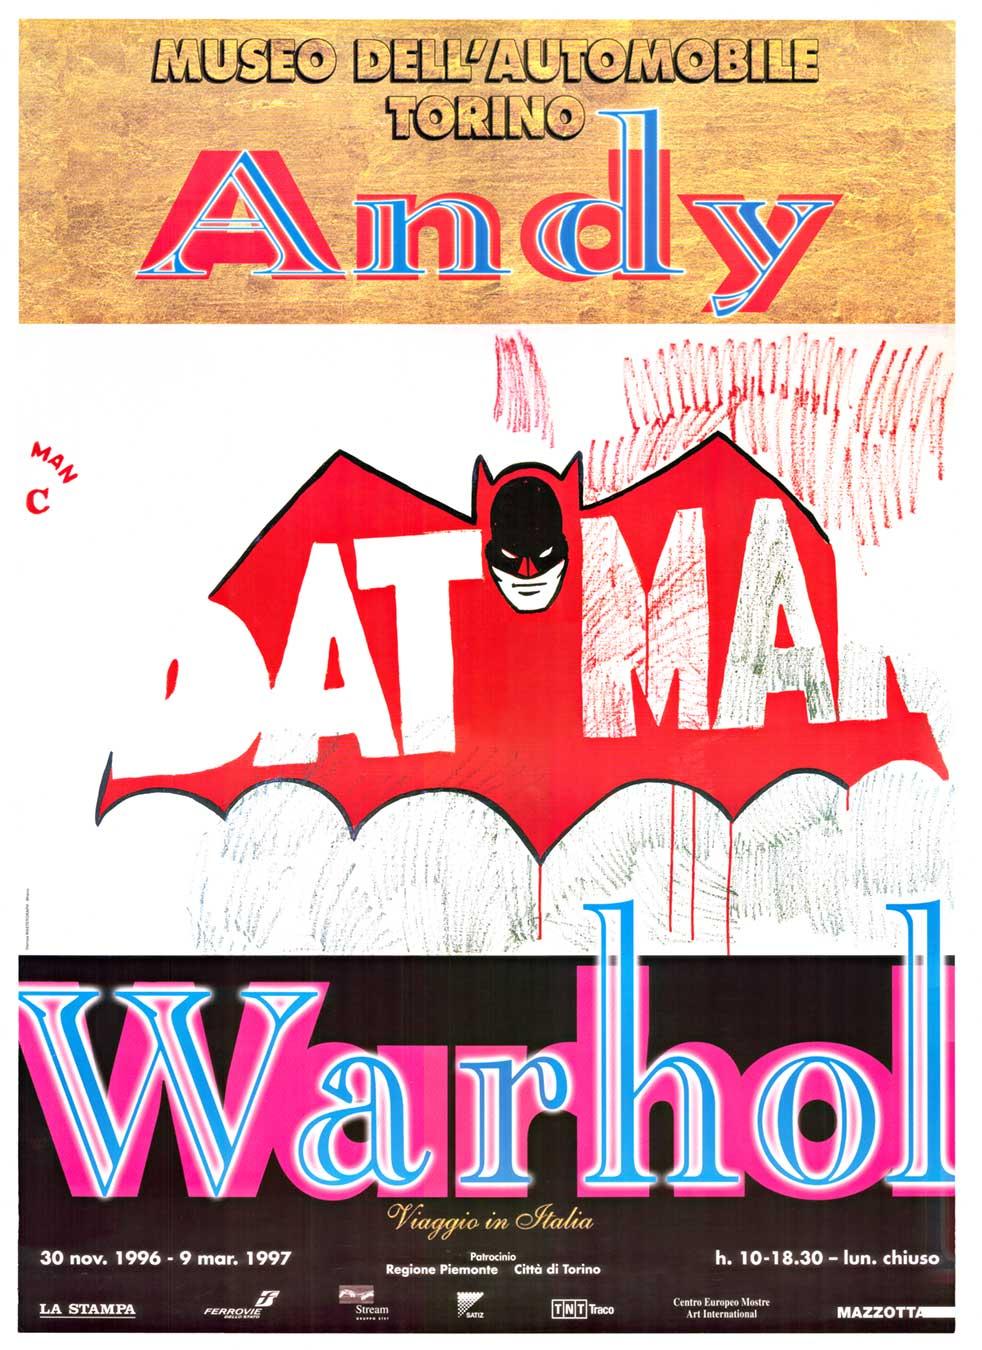 (after) Andy Warhol Figurative Print - Original Batman Museo Dell'Automobile Torino vintage Italian poster